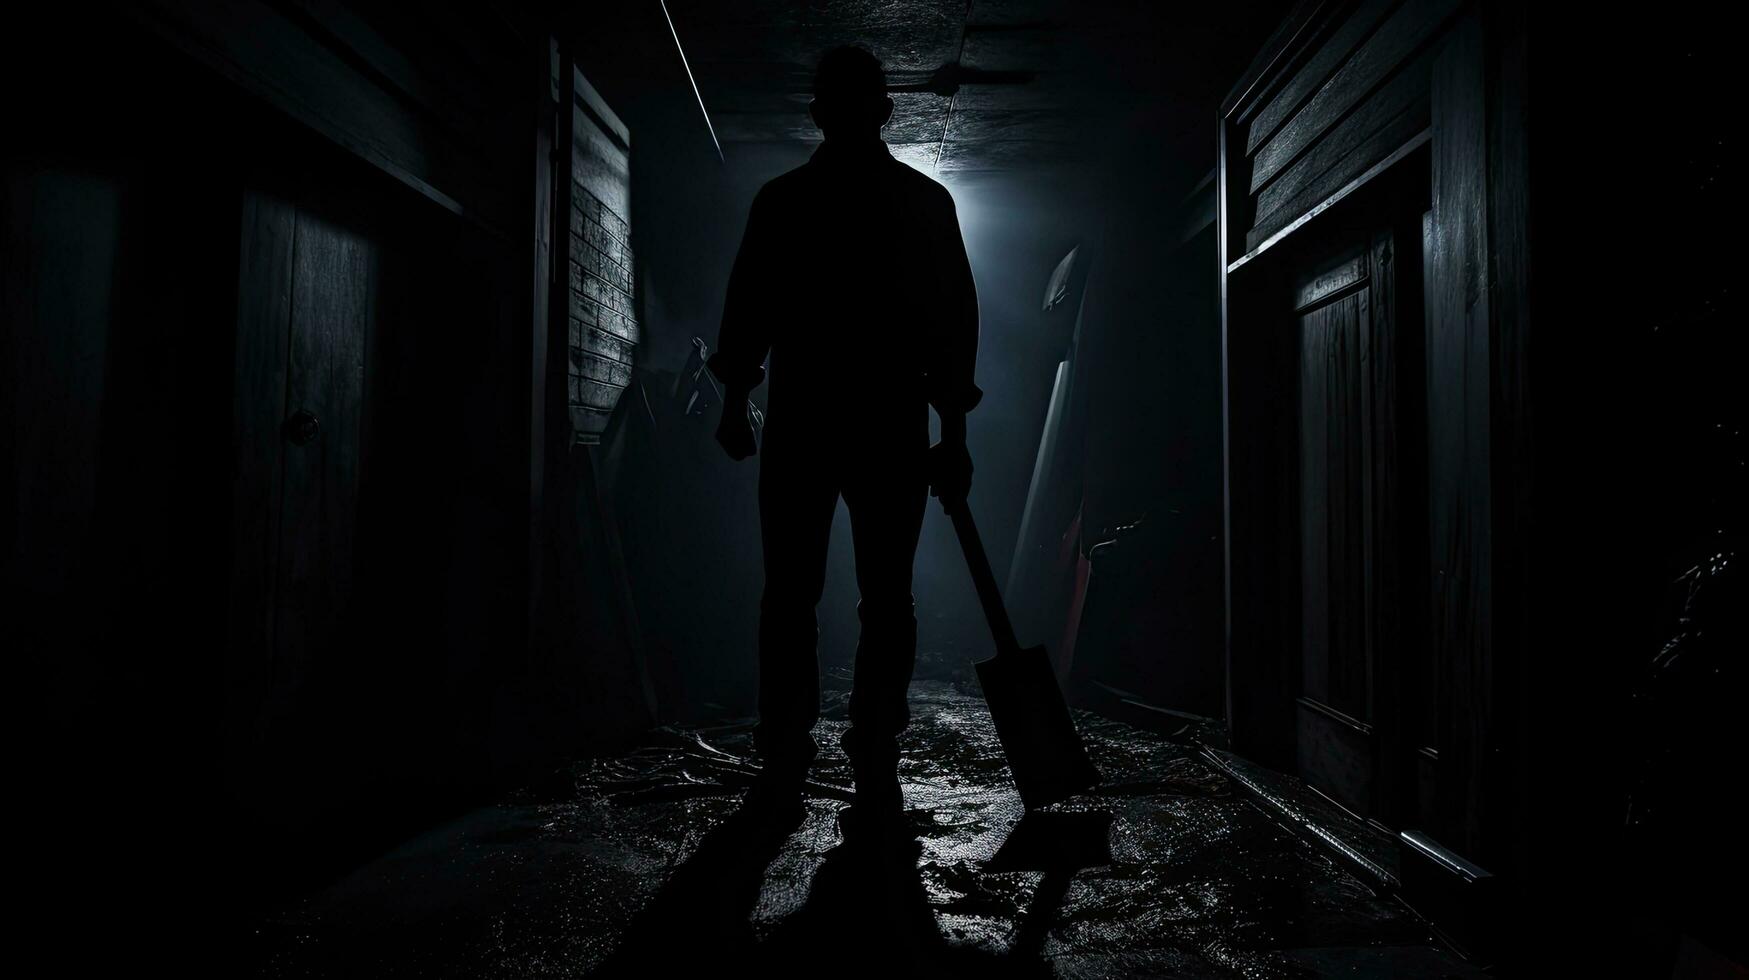 Dark hallway with man holding axe creates terrifying murder scenes photo